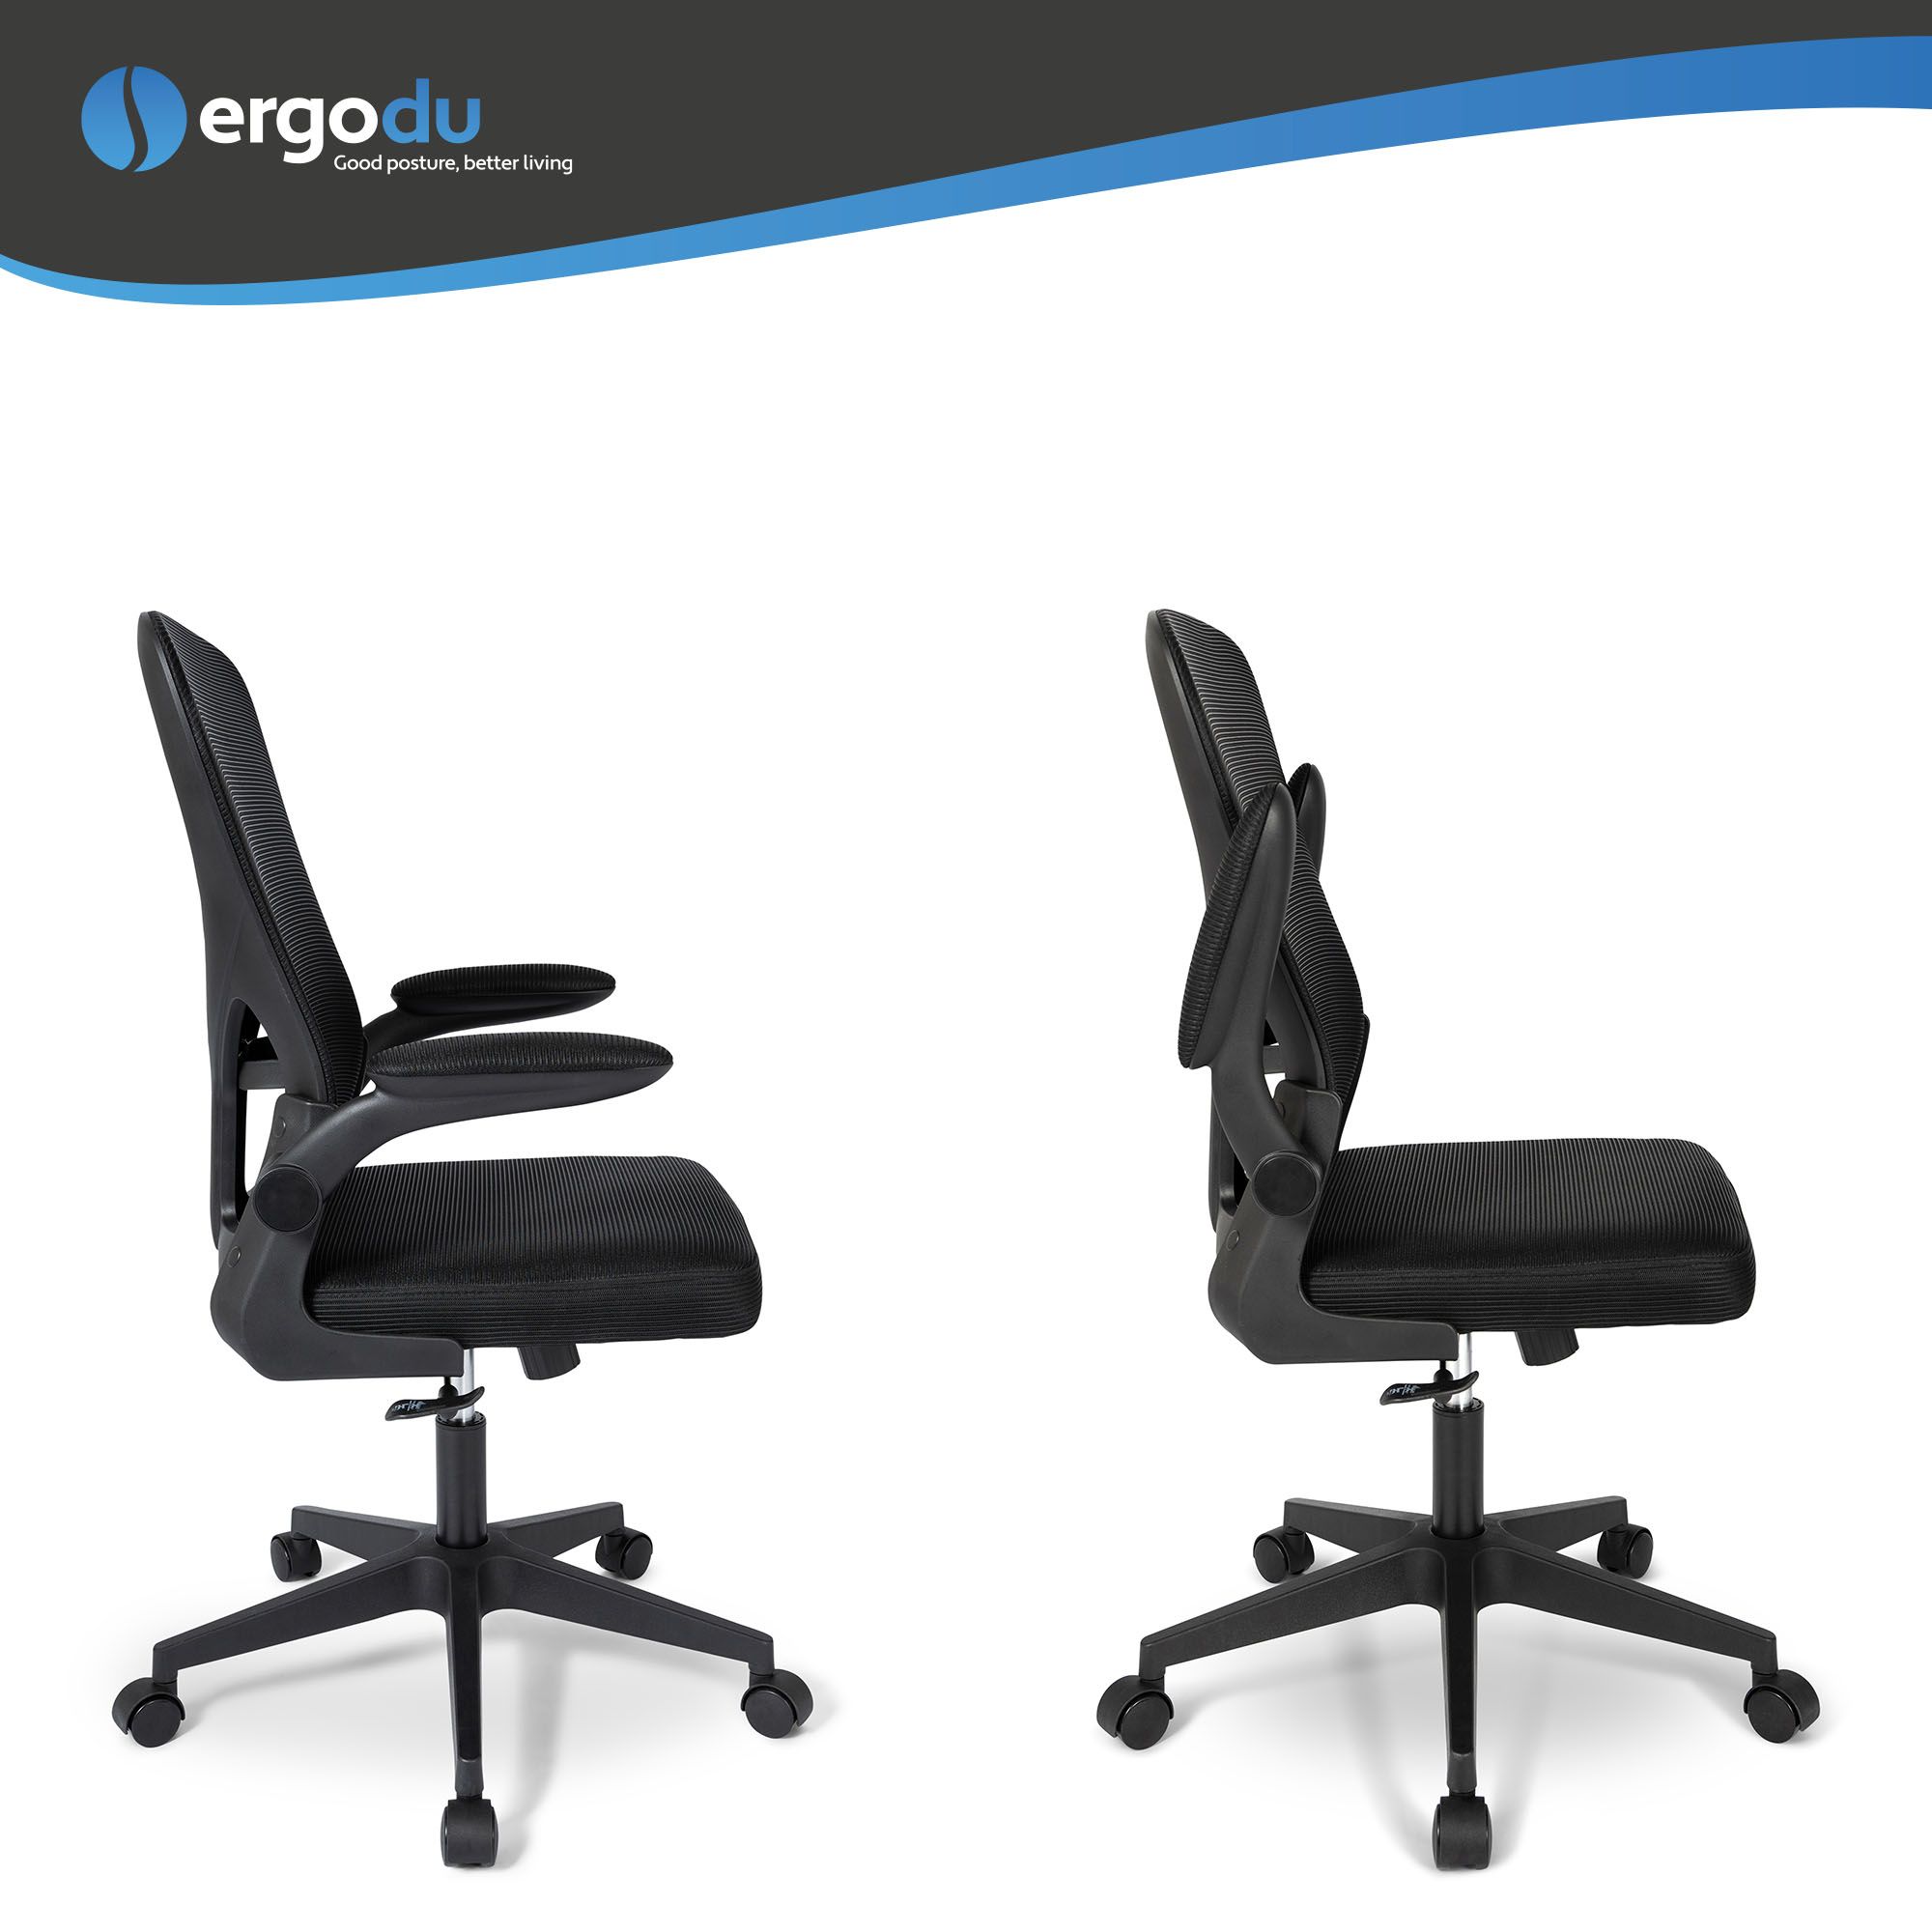 Ergodu Ergonomic Office Chair with Foldable Armrests 